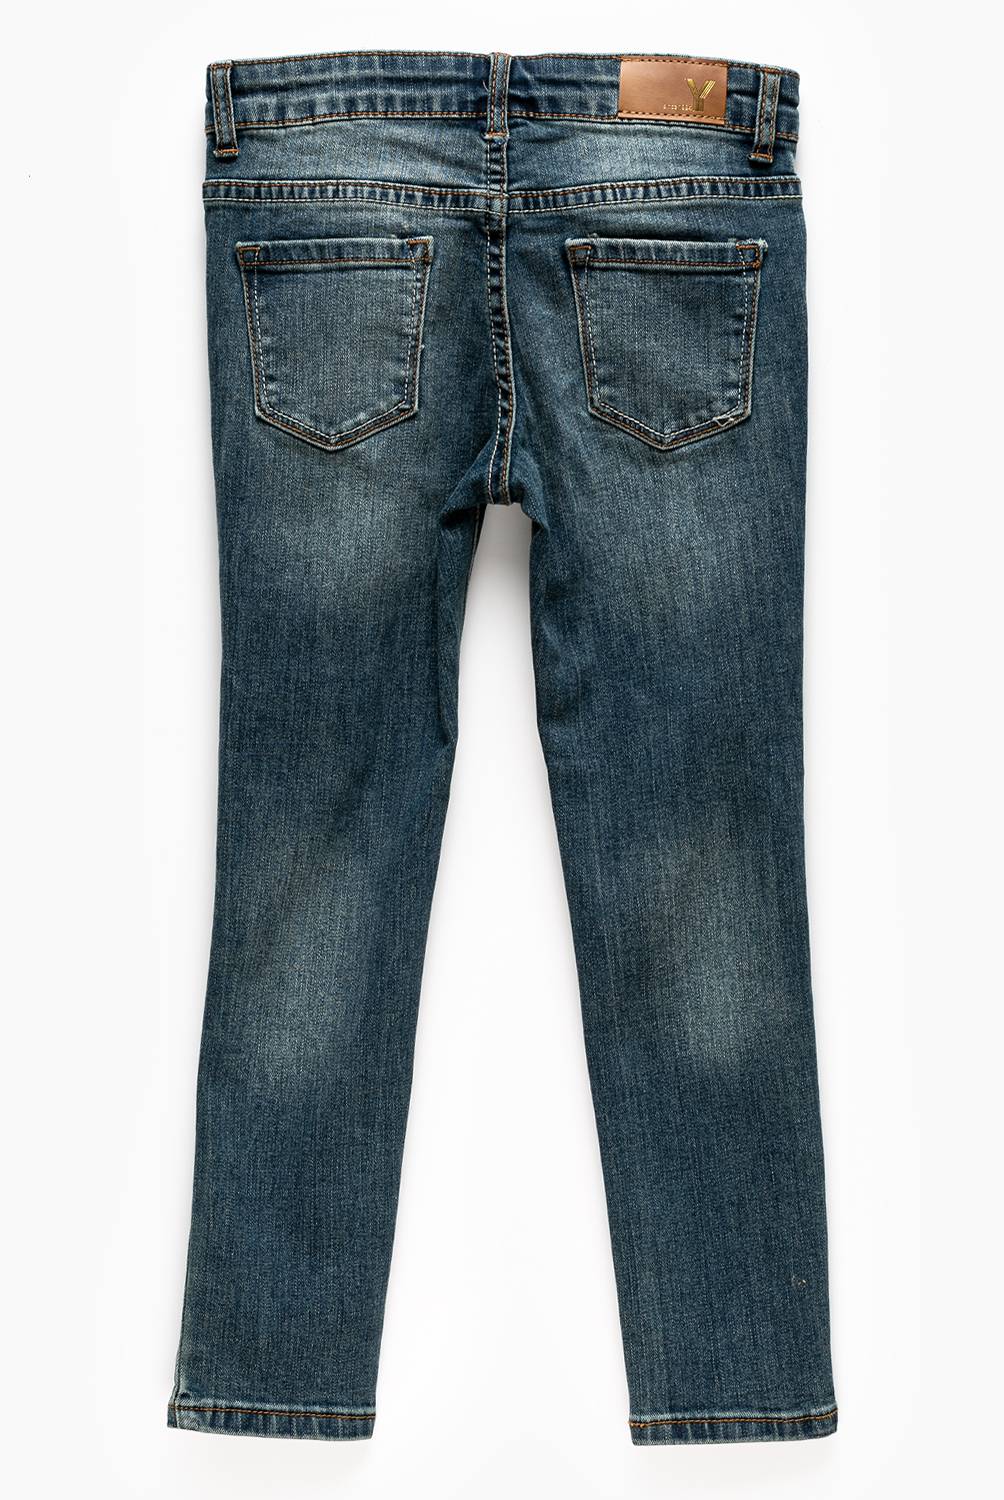 Yamp - Jeans Niña de Algodón